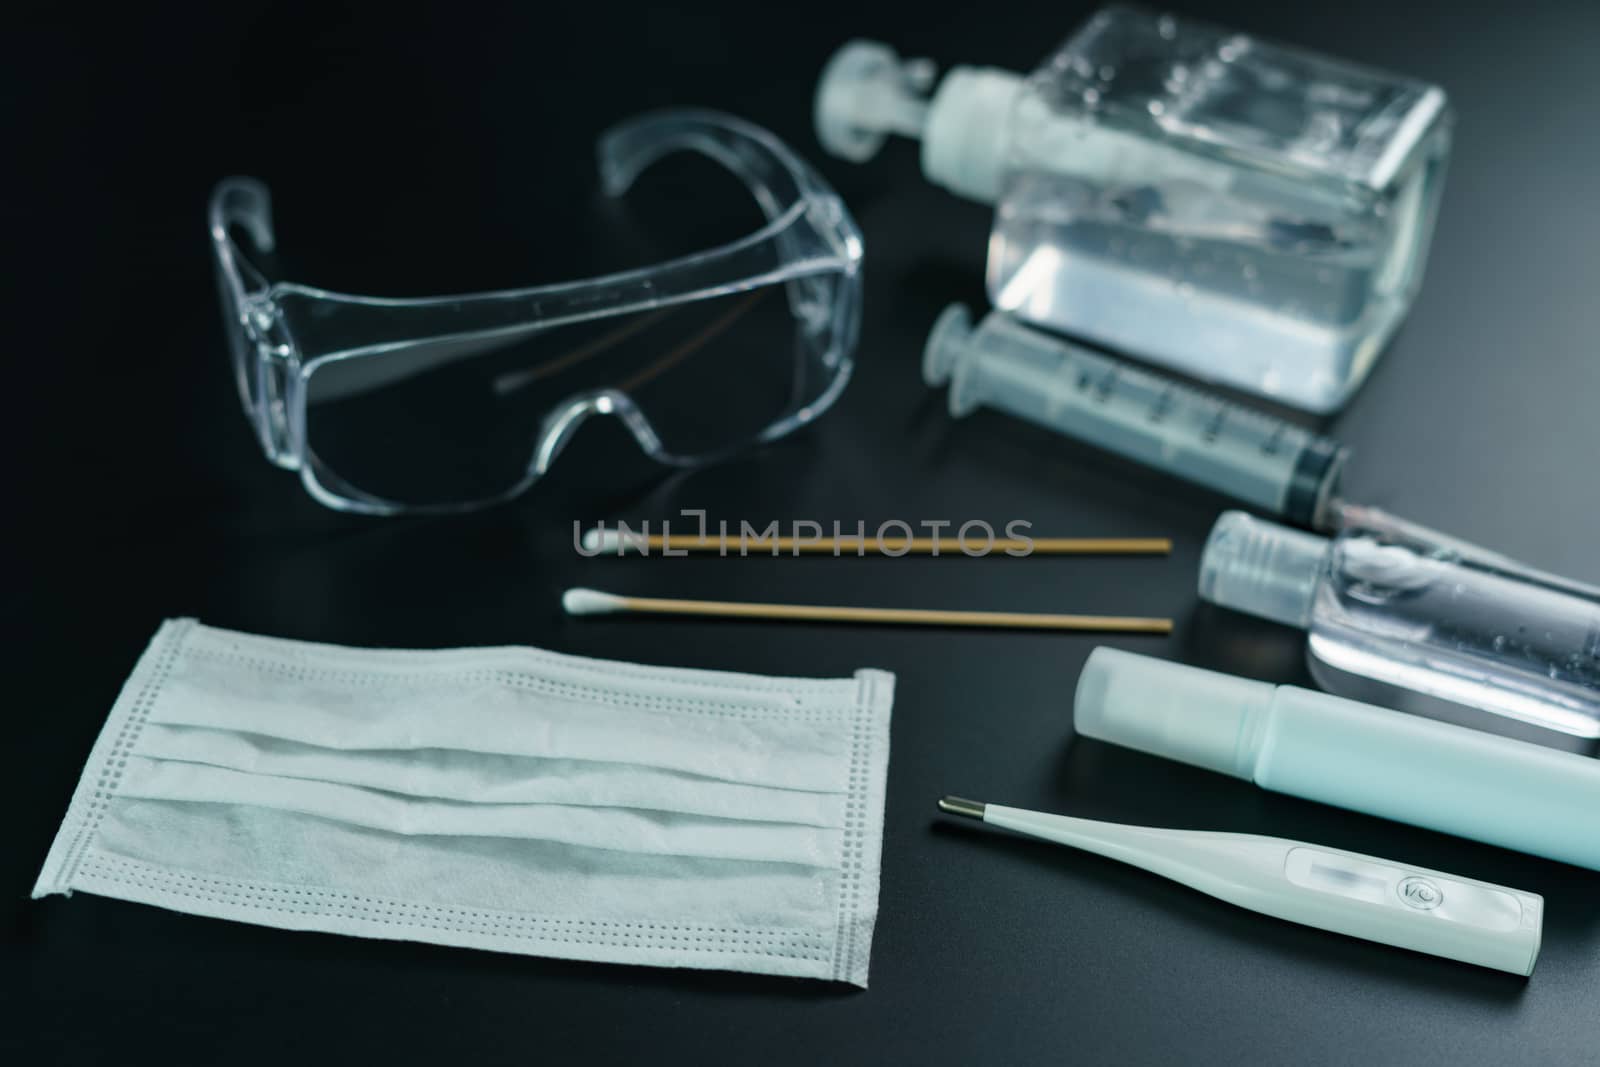 Corona virus medical equipment: Medical masks, safety glasses, syringe, cotton swab, sanitizer and thermometer with petri dish on the table. Coronavirus, Covid-19 protection.